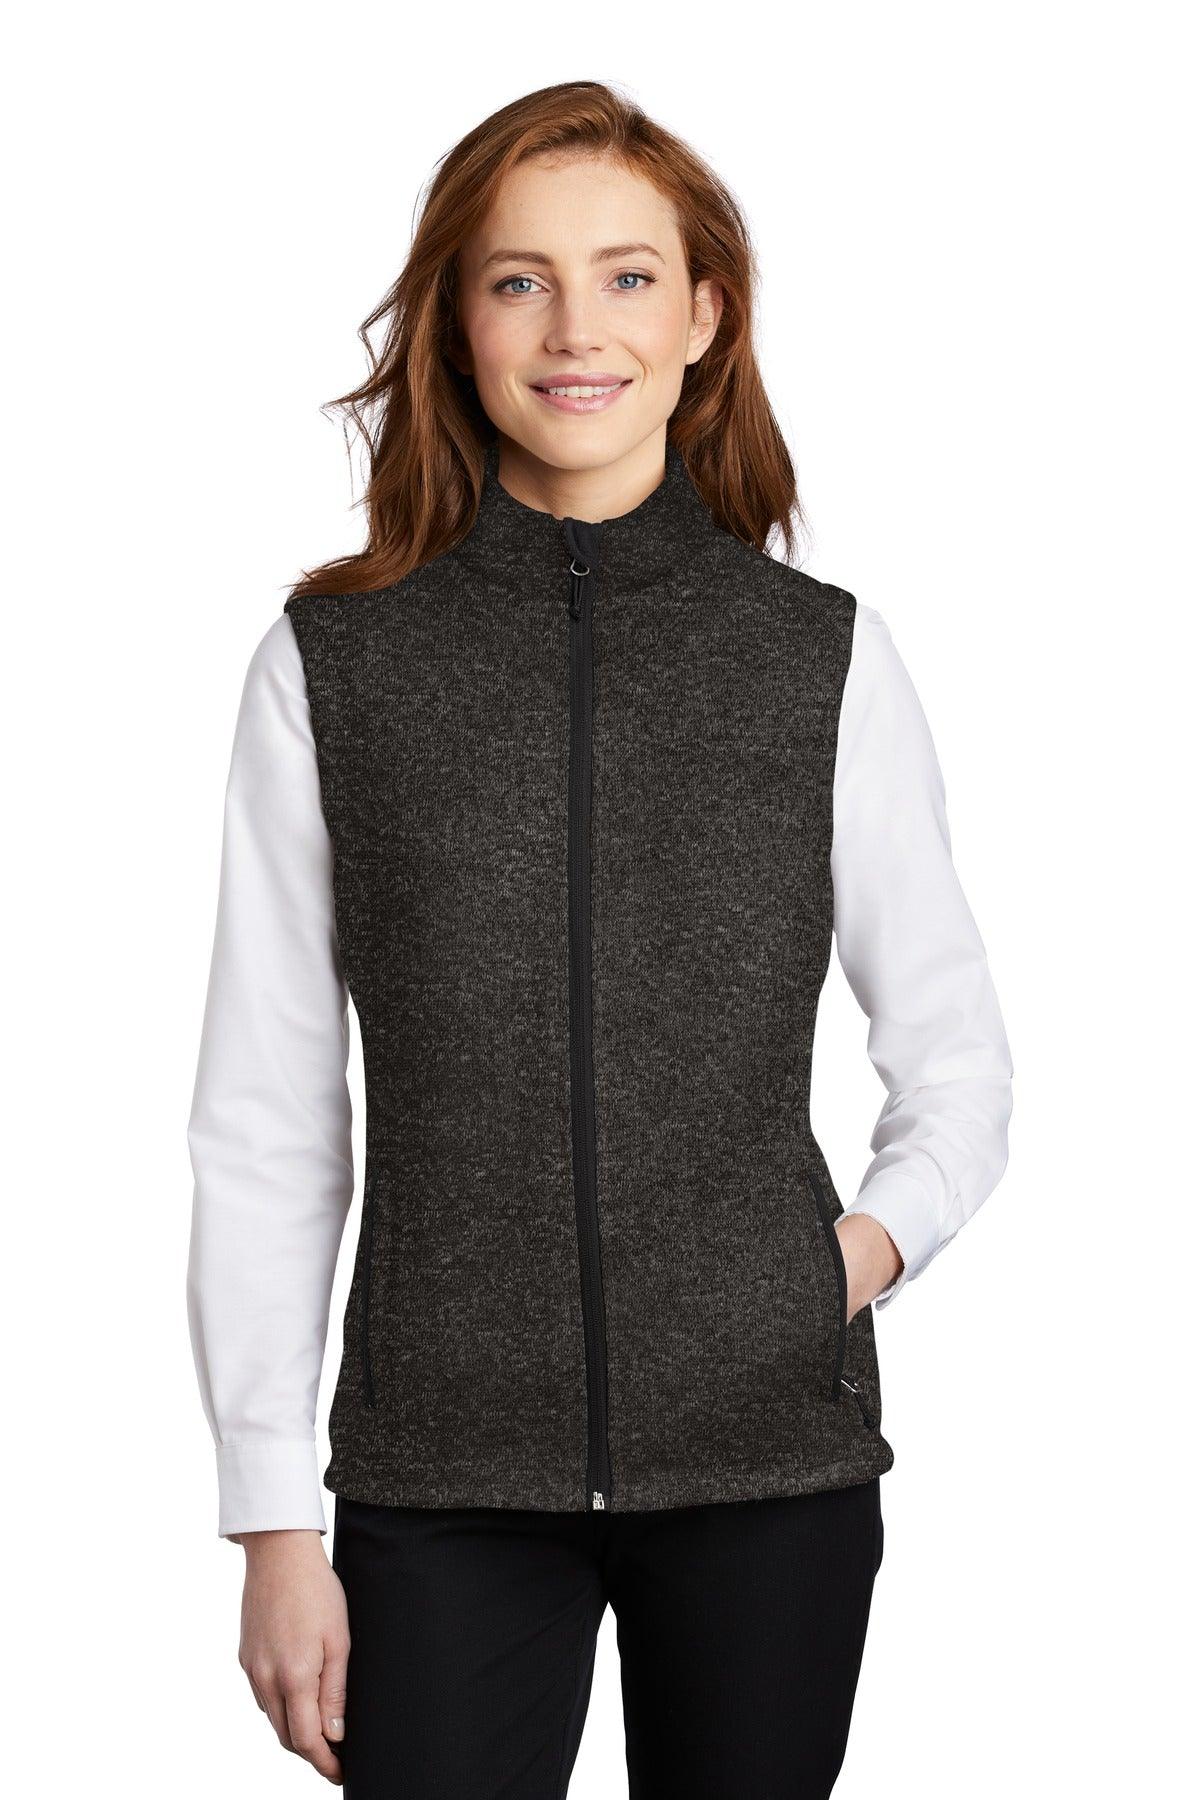 Port Authority Ladies Sweater Fleece Vest L236 - Dresses Max